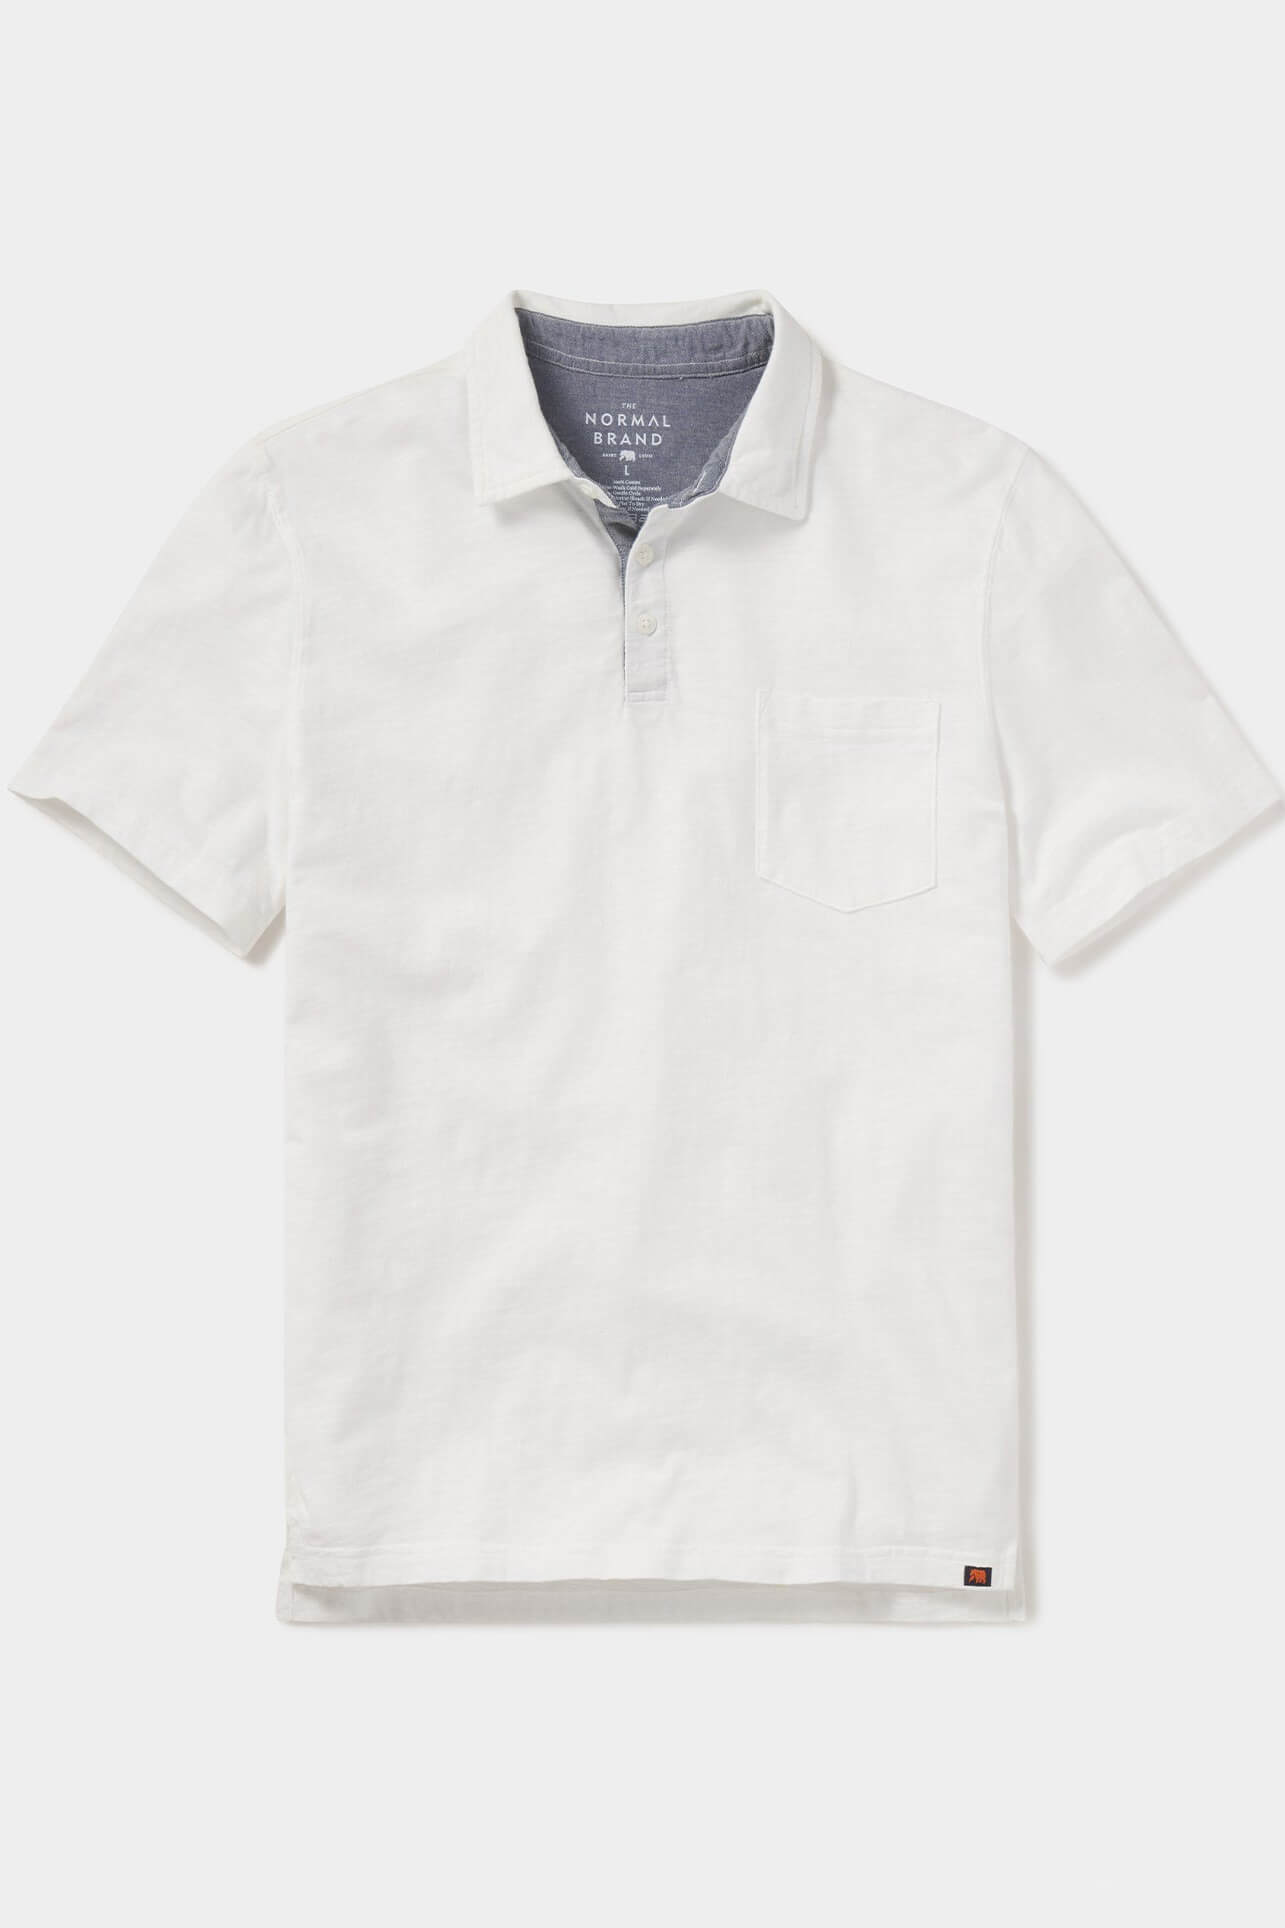 The Normal Brand vintage slub pocket polo in white